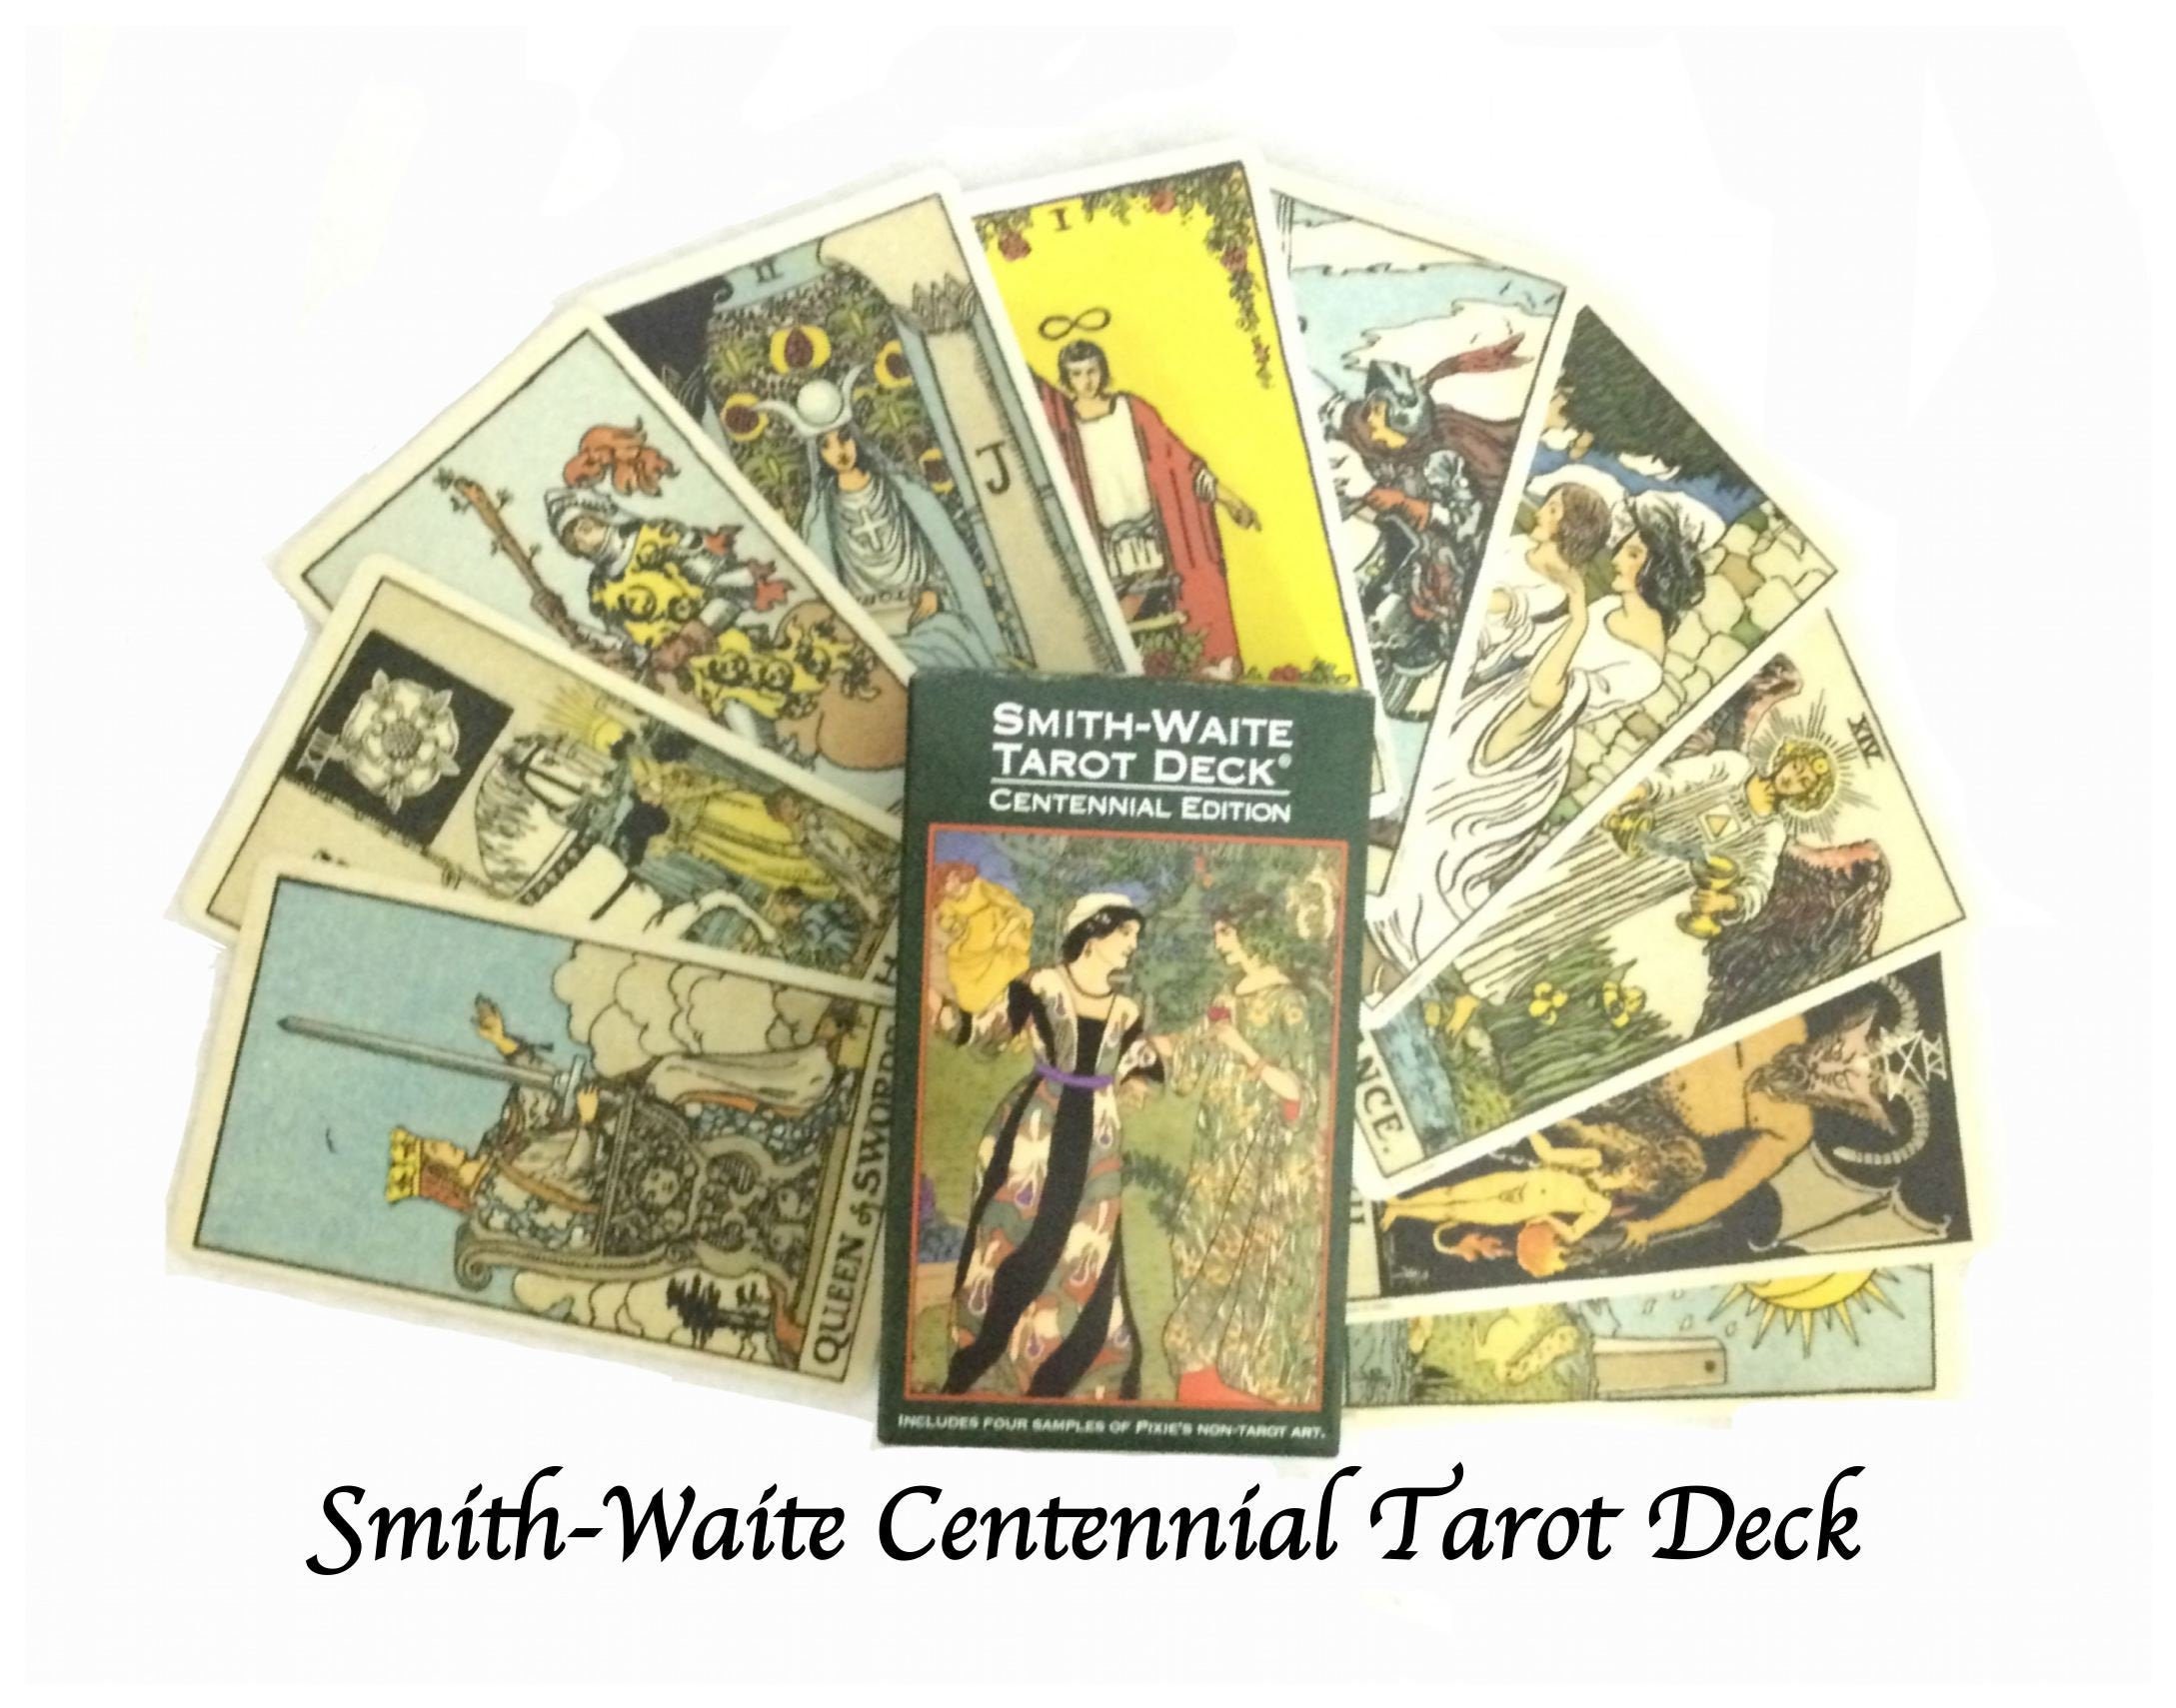 Smith-waite Tarot Deck, Centennial Edition, Authentic Full Size